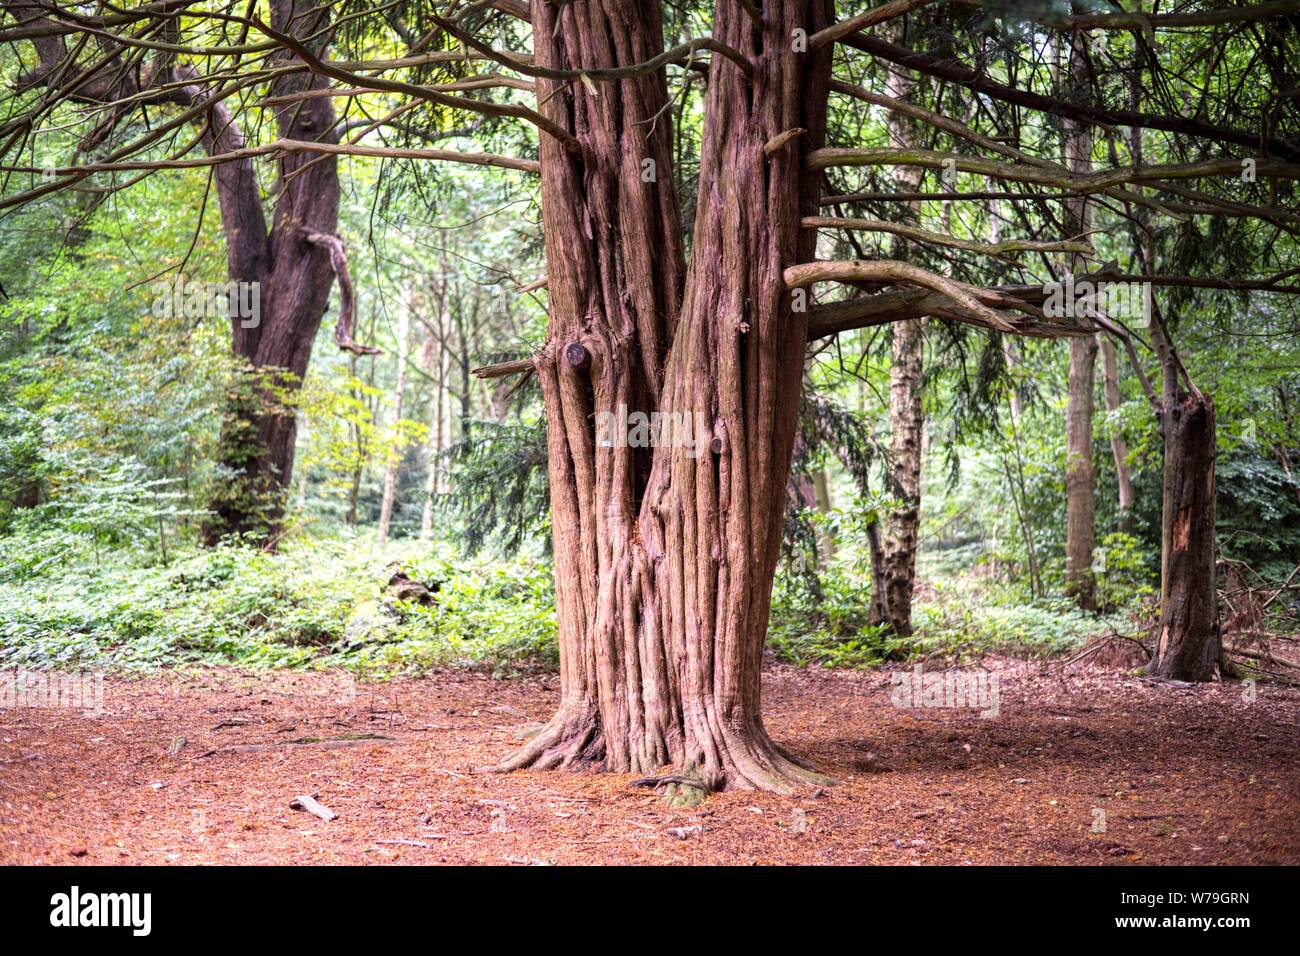 Twisted old tree, Clumber Park, Nottinghamshire, UK Stock Photo